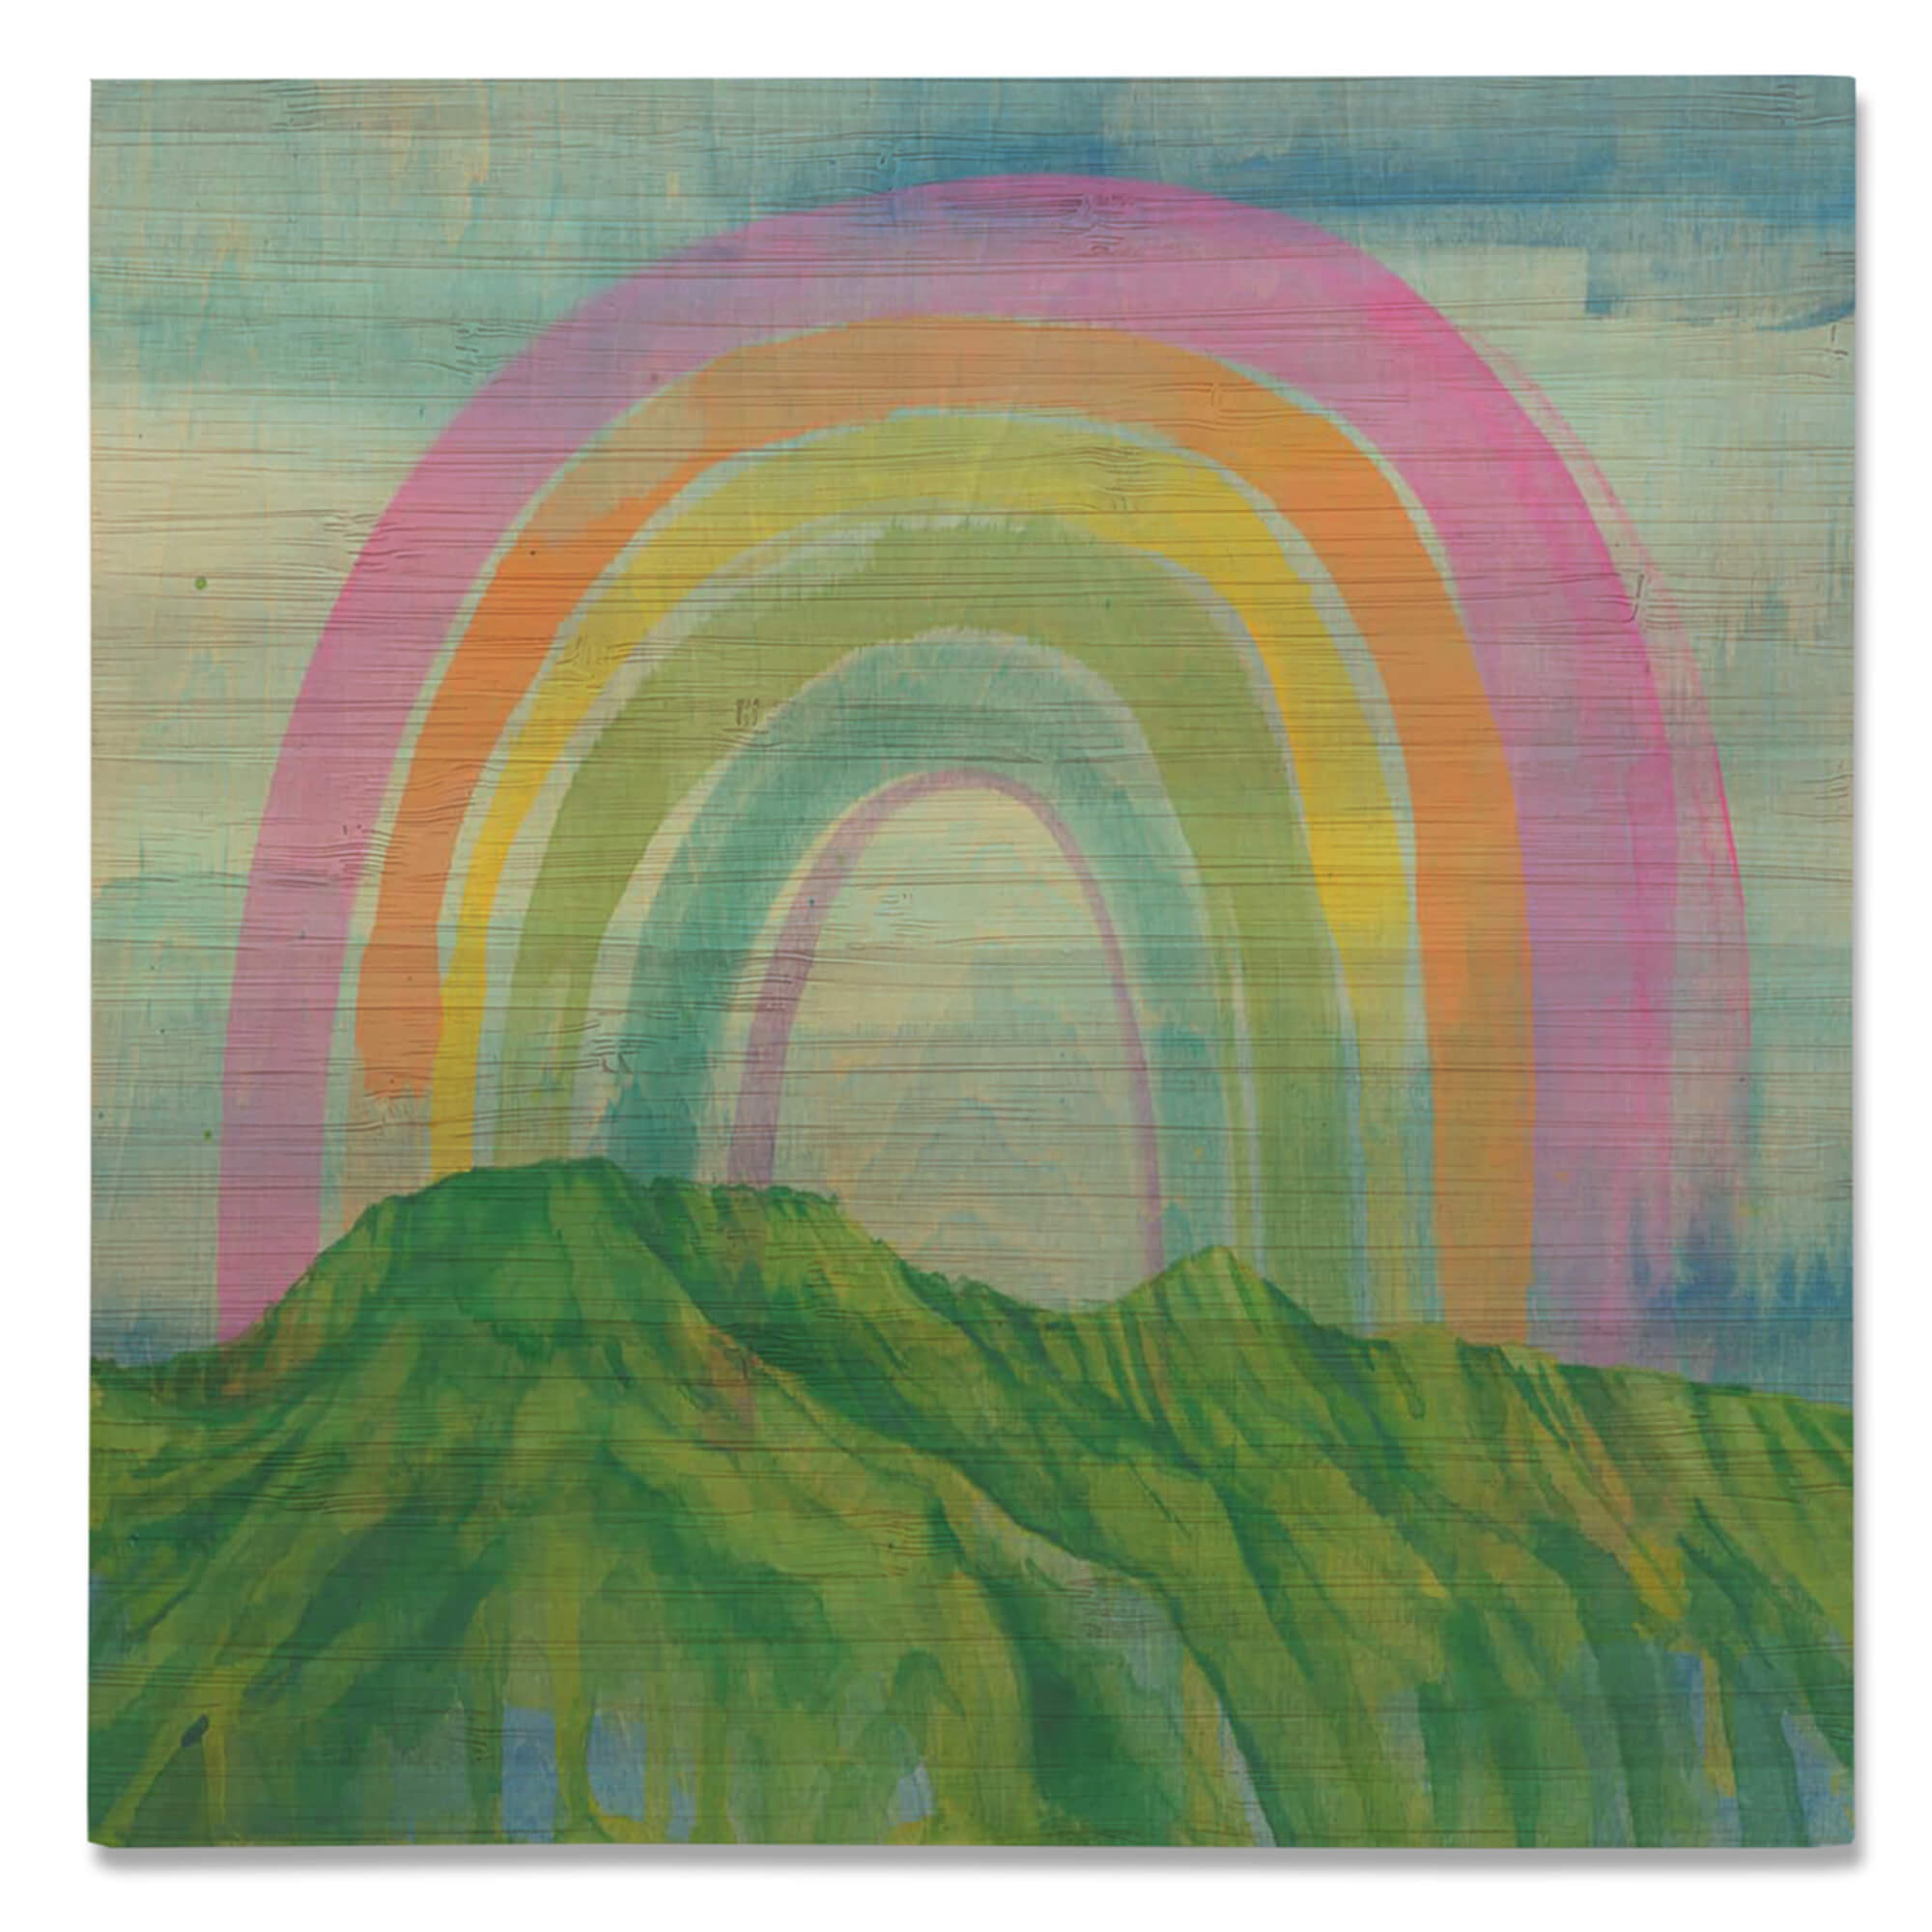 A bamboo print of a Hawaii rainbow over the Koolau mountains by Hawaii artist Lauren Roth